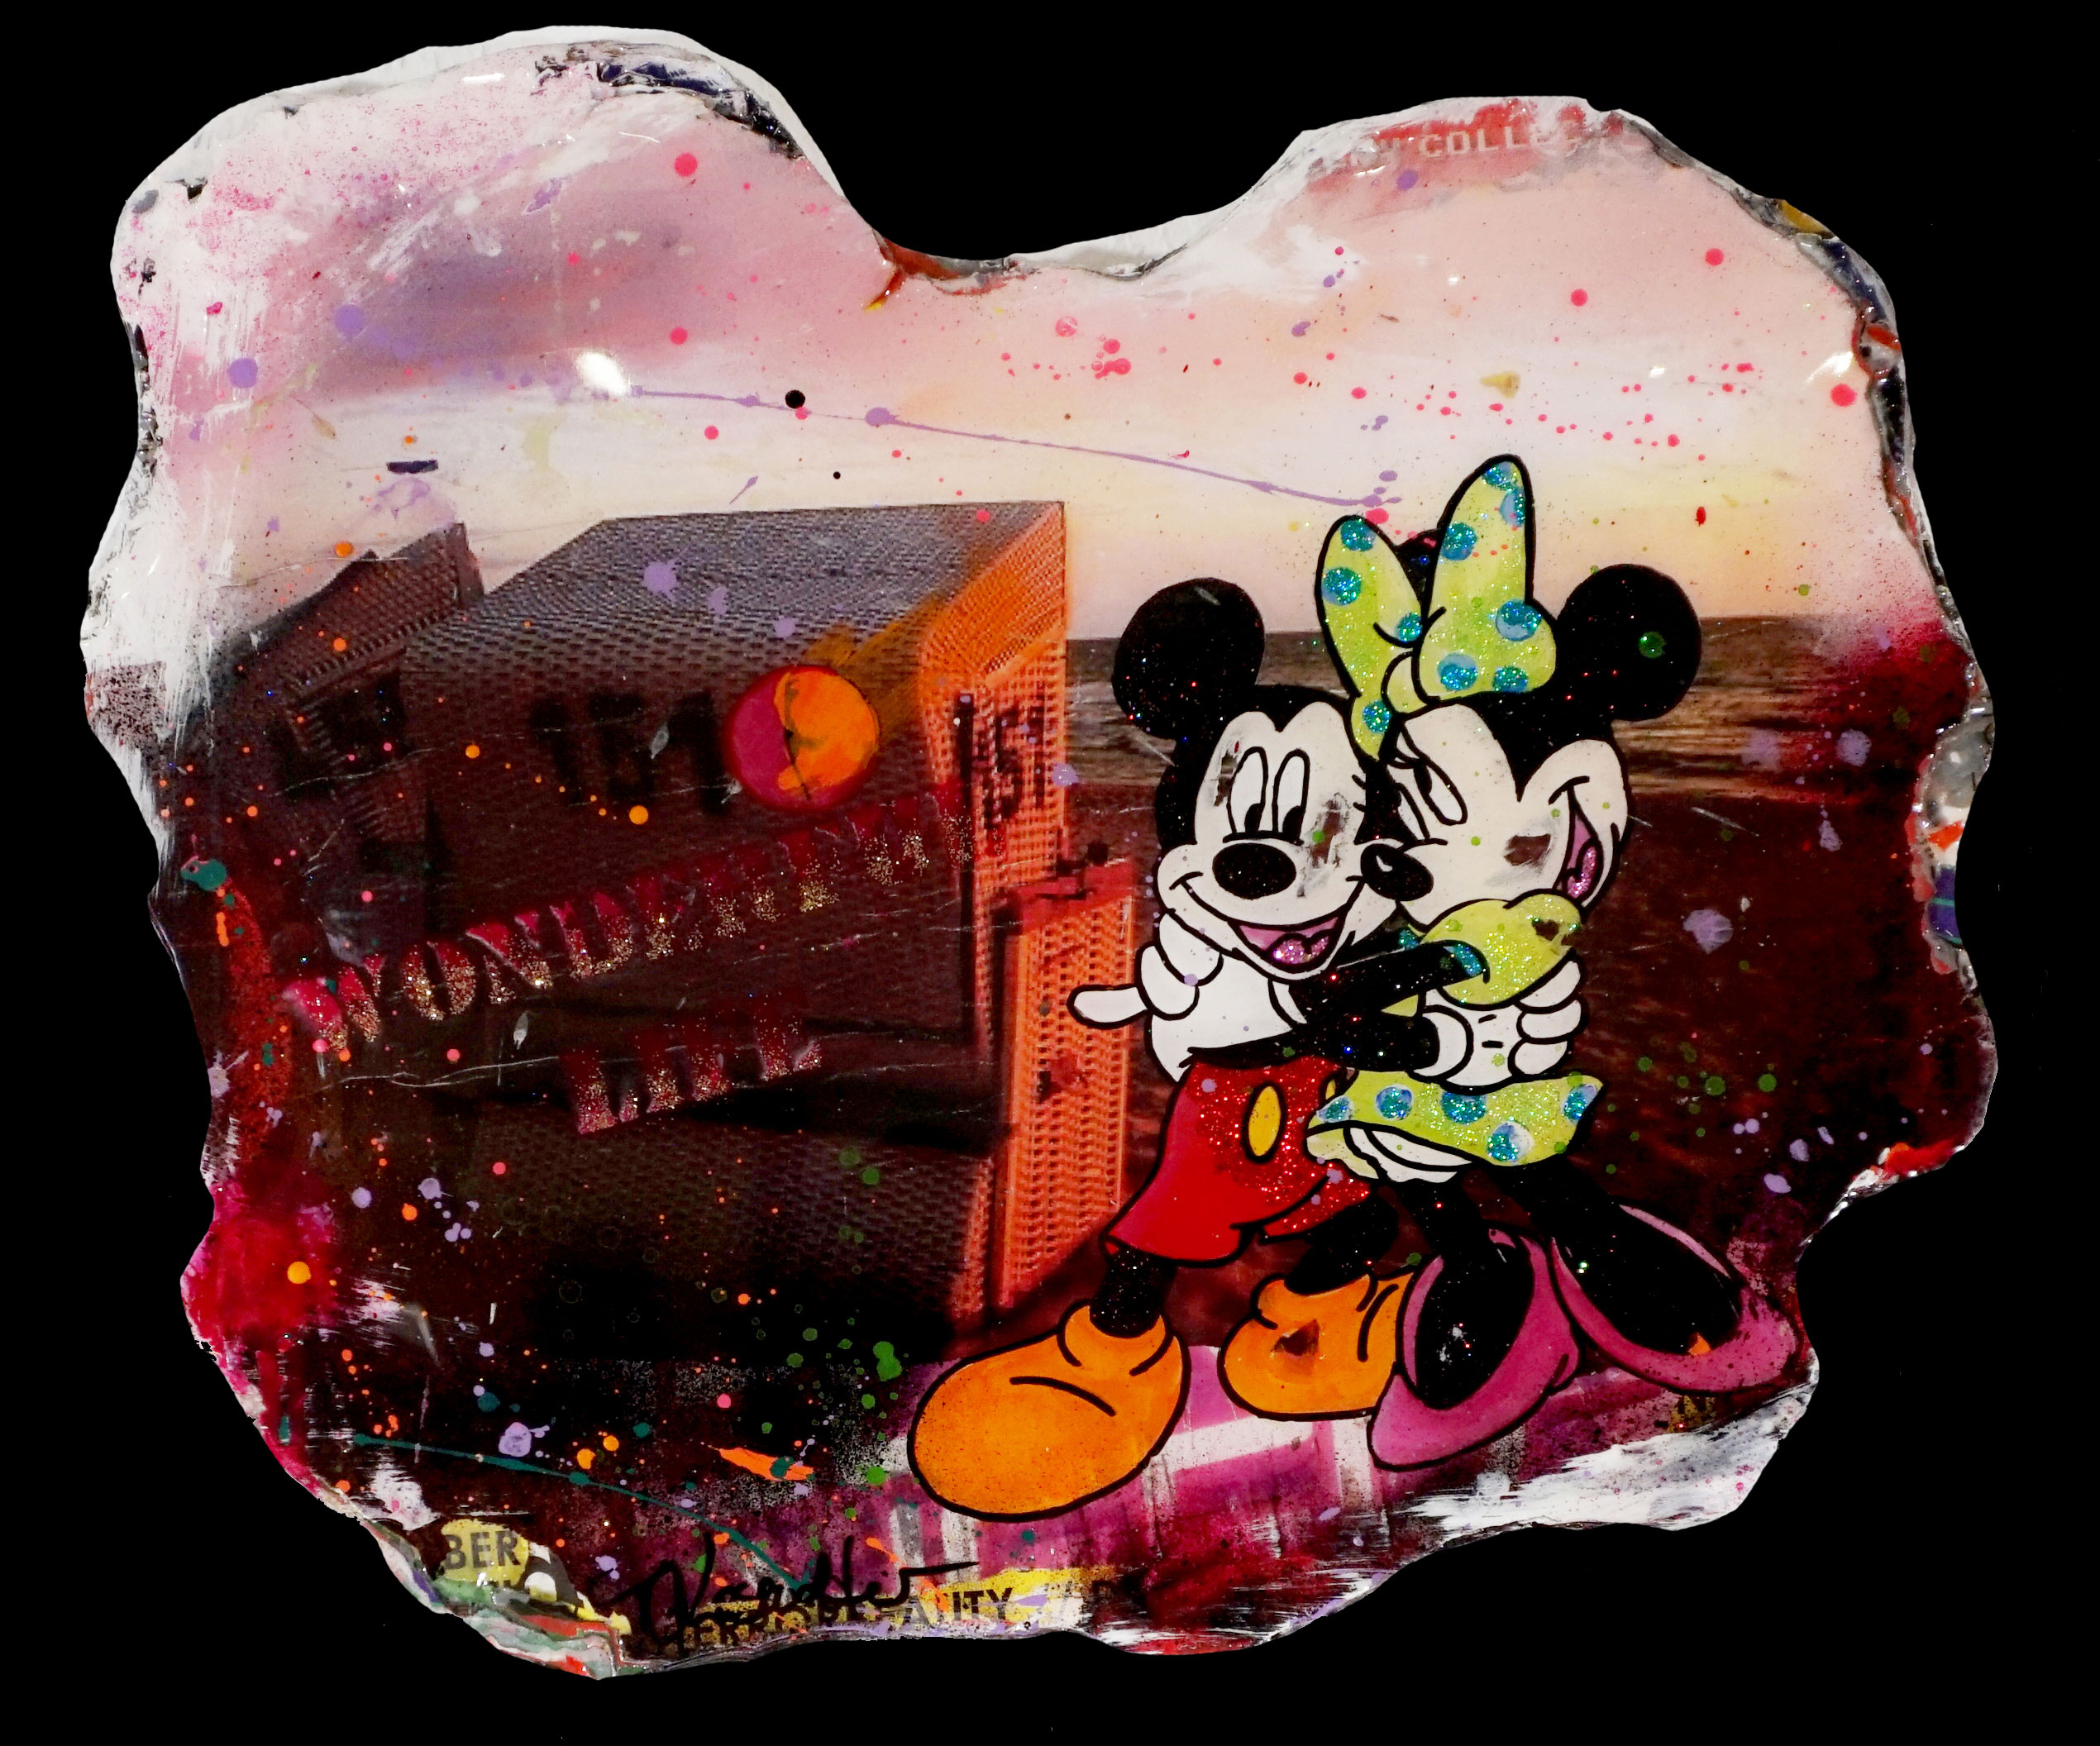 Tanja Kiesewalter "Wonderful live - Mickey Mouse"